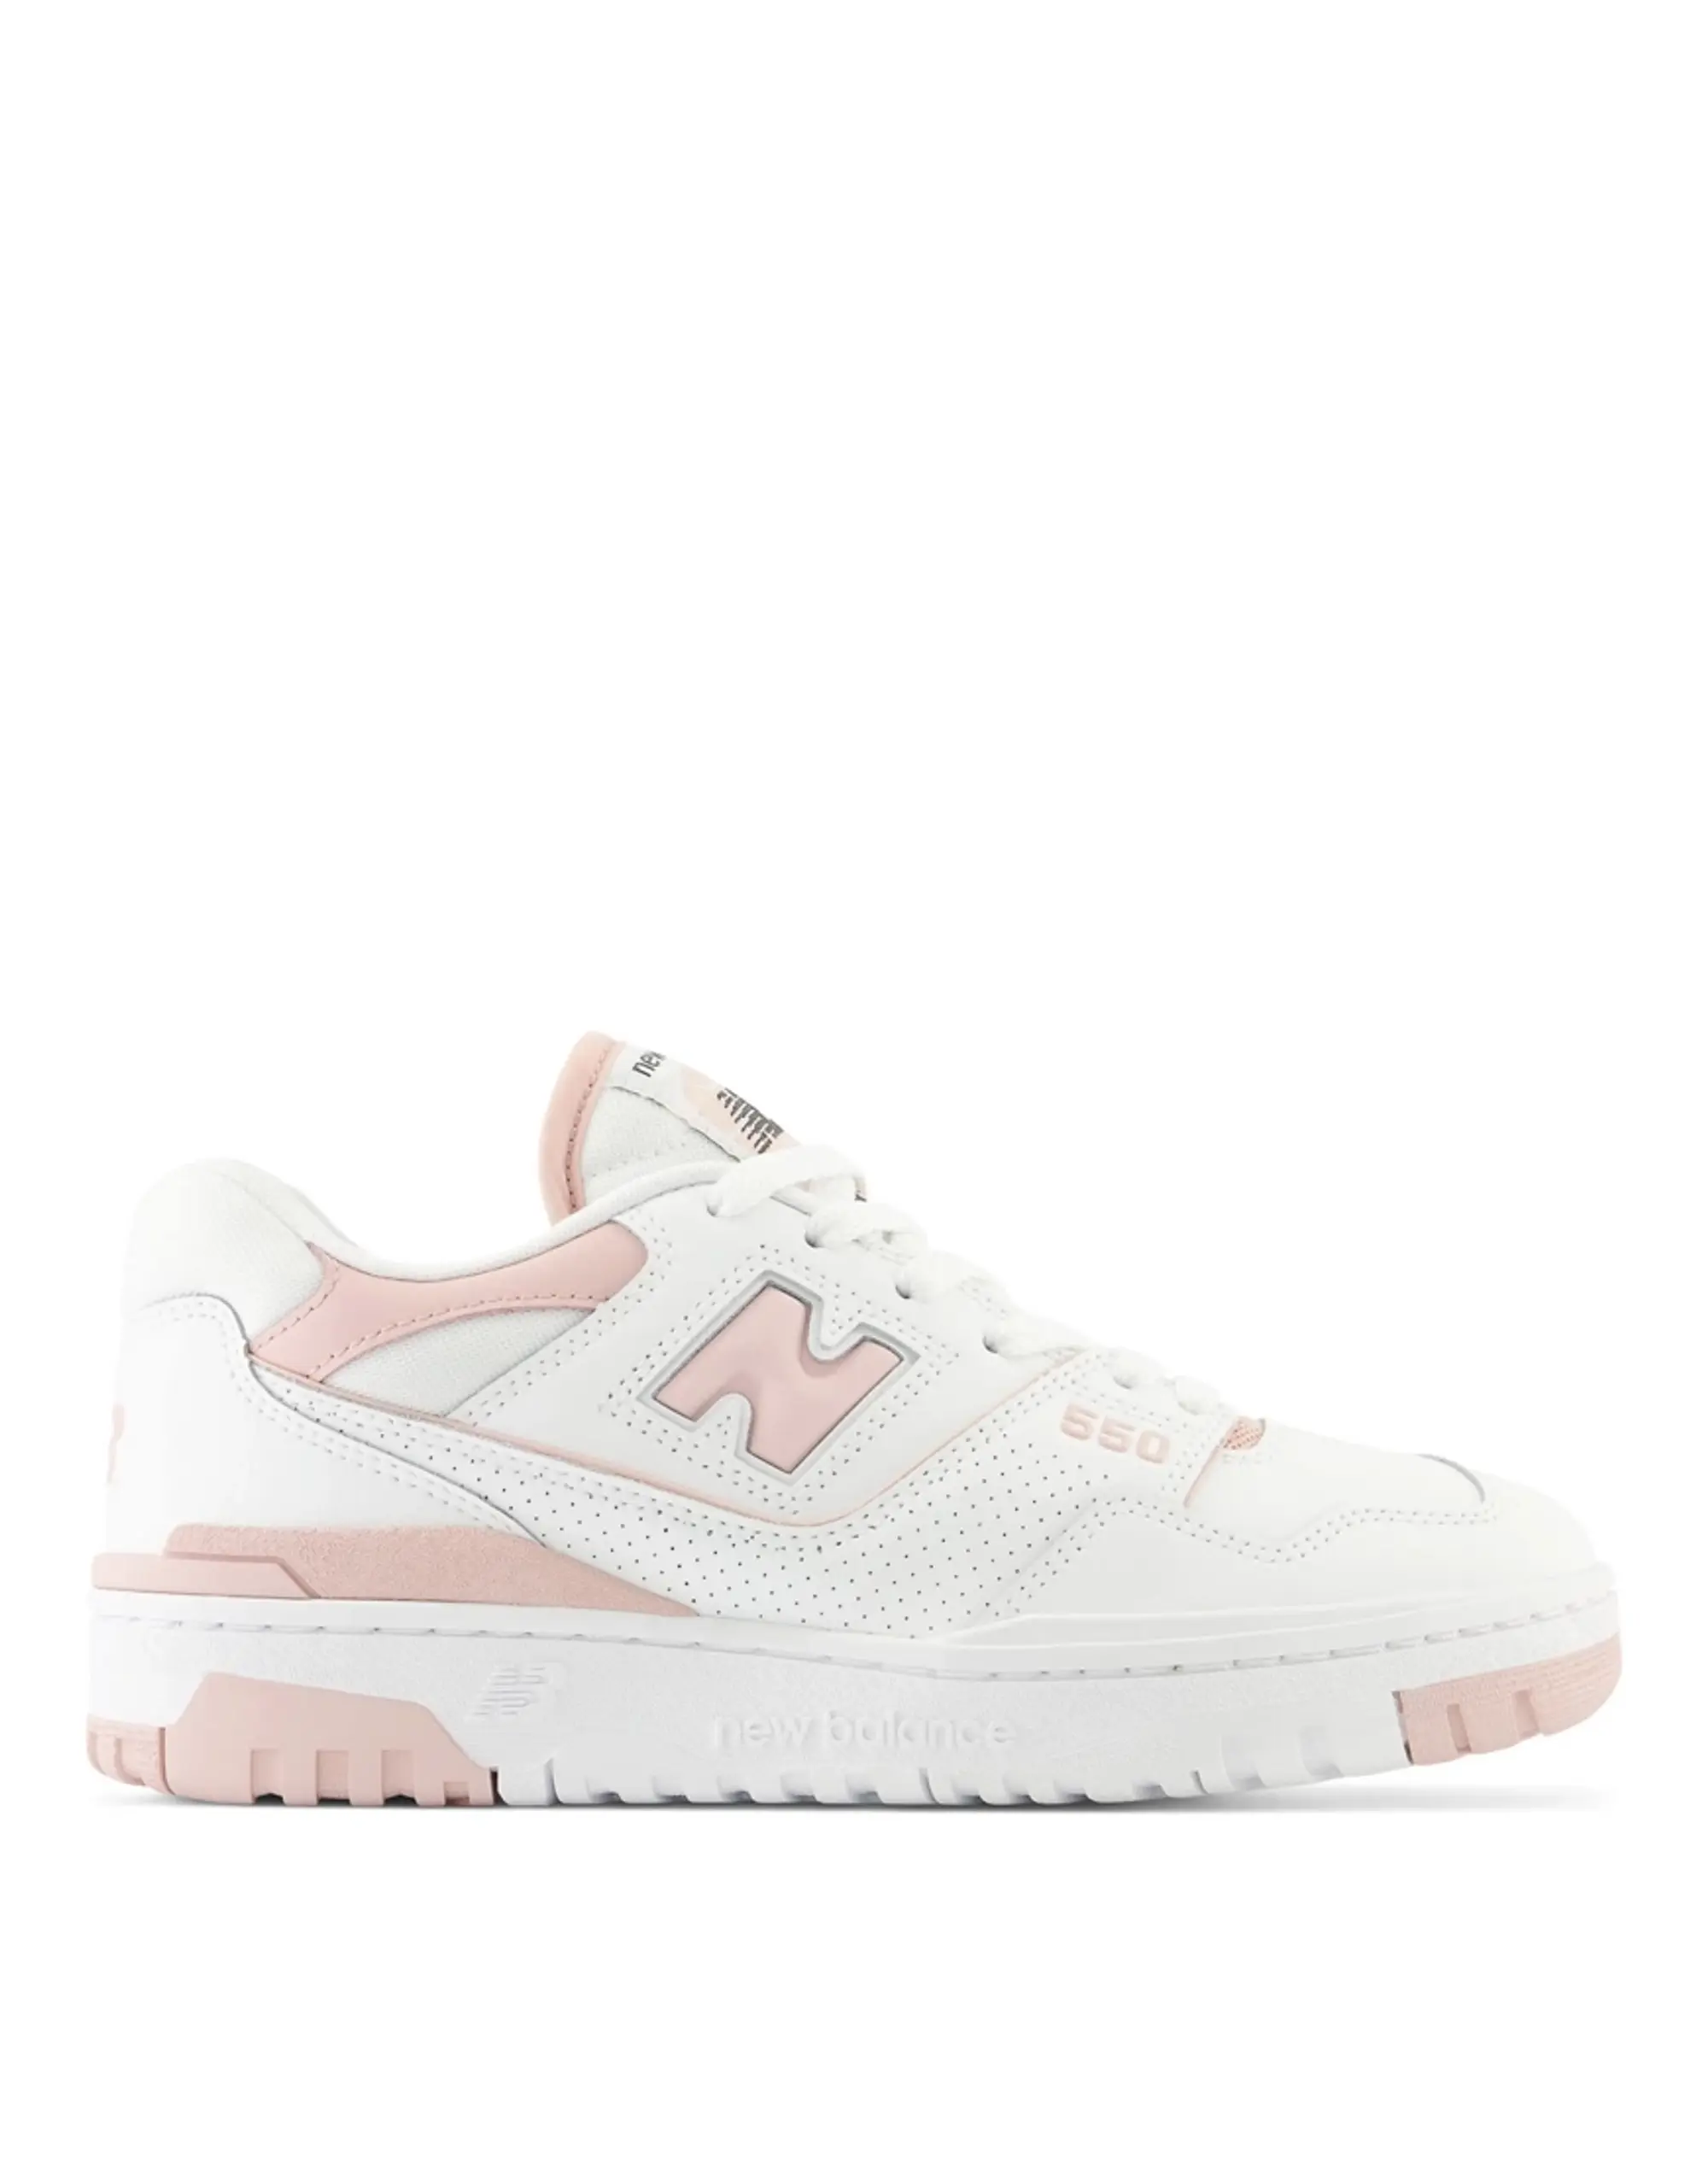 New Balance 550 White/ Pink